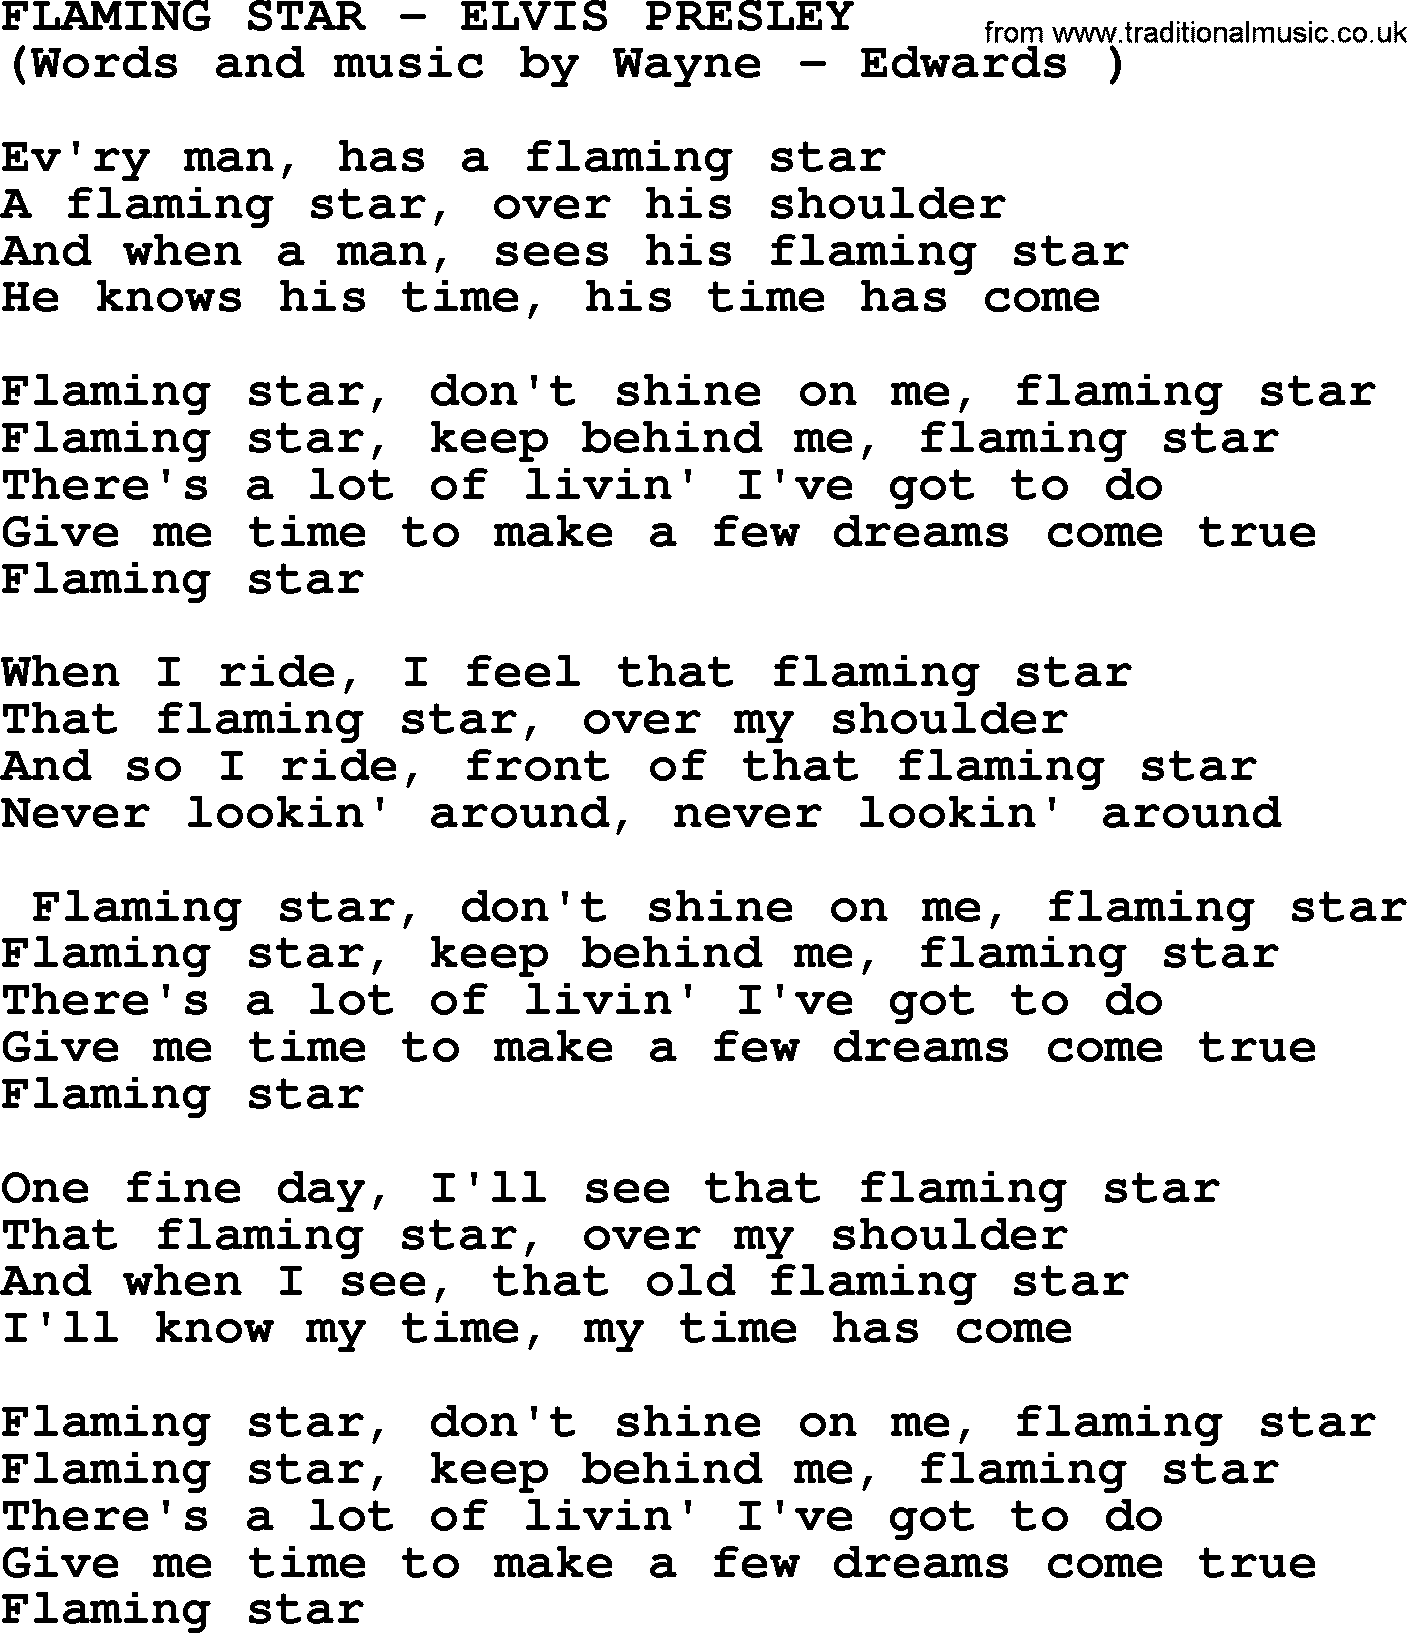 Elvis Presley song: Flaming Star lyrics